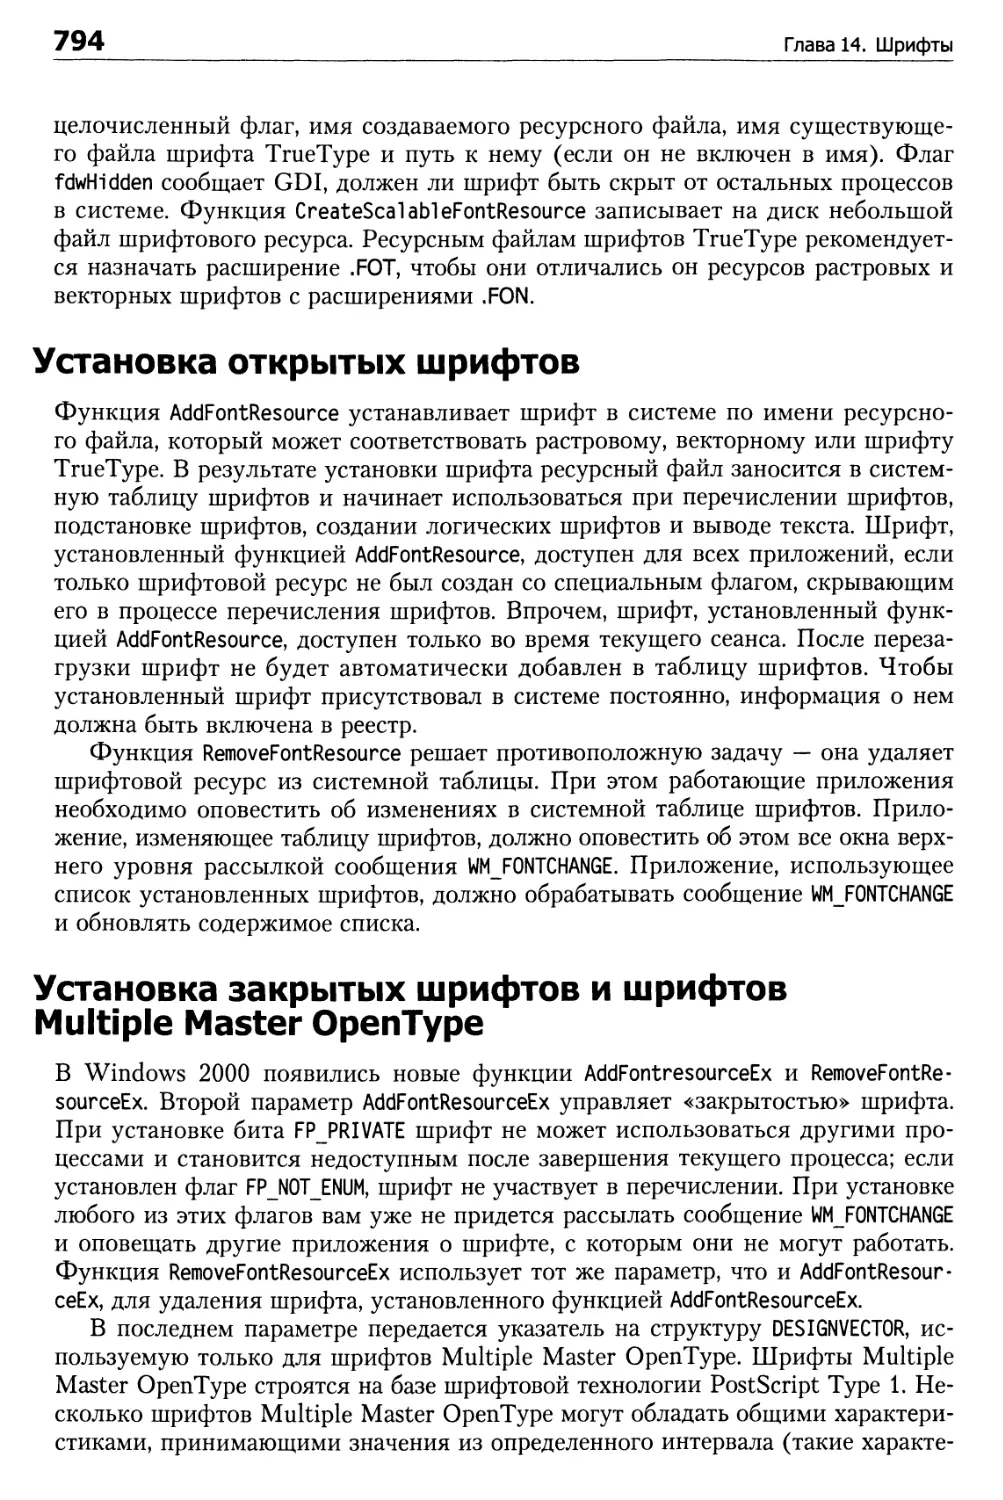 Установка открытых шрифтов
Установка закрытых шрифтов и шрифтов Multiple Master OpenType